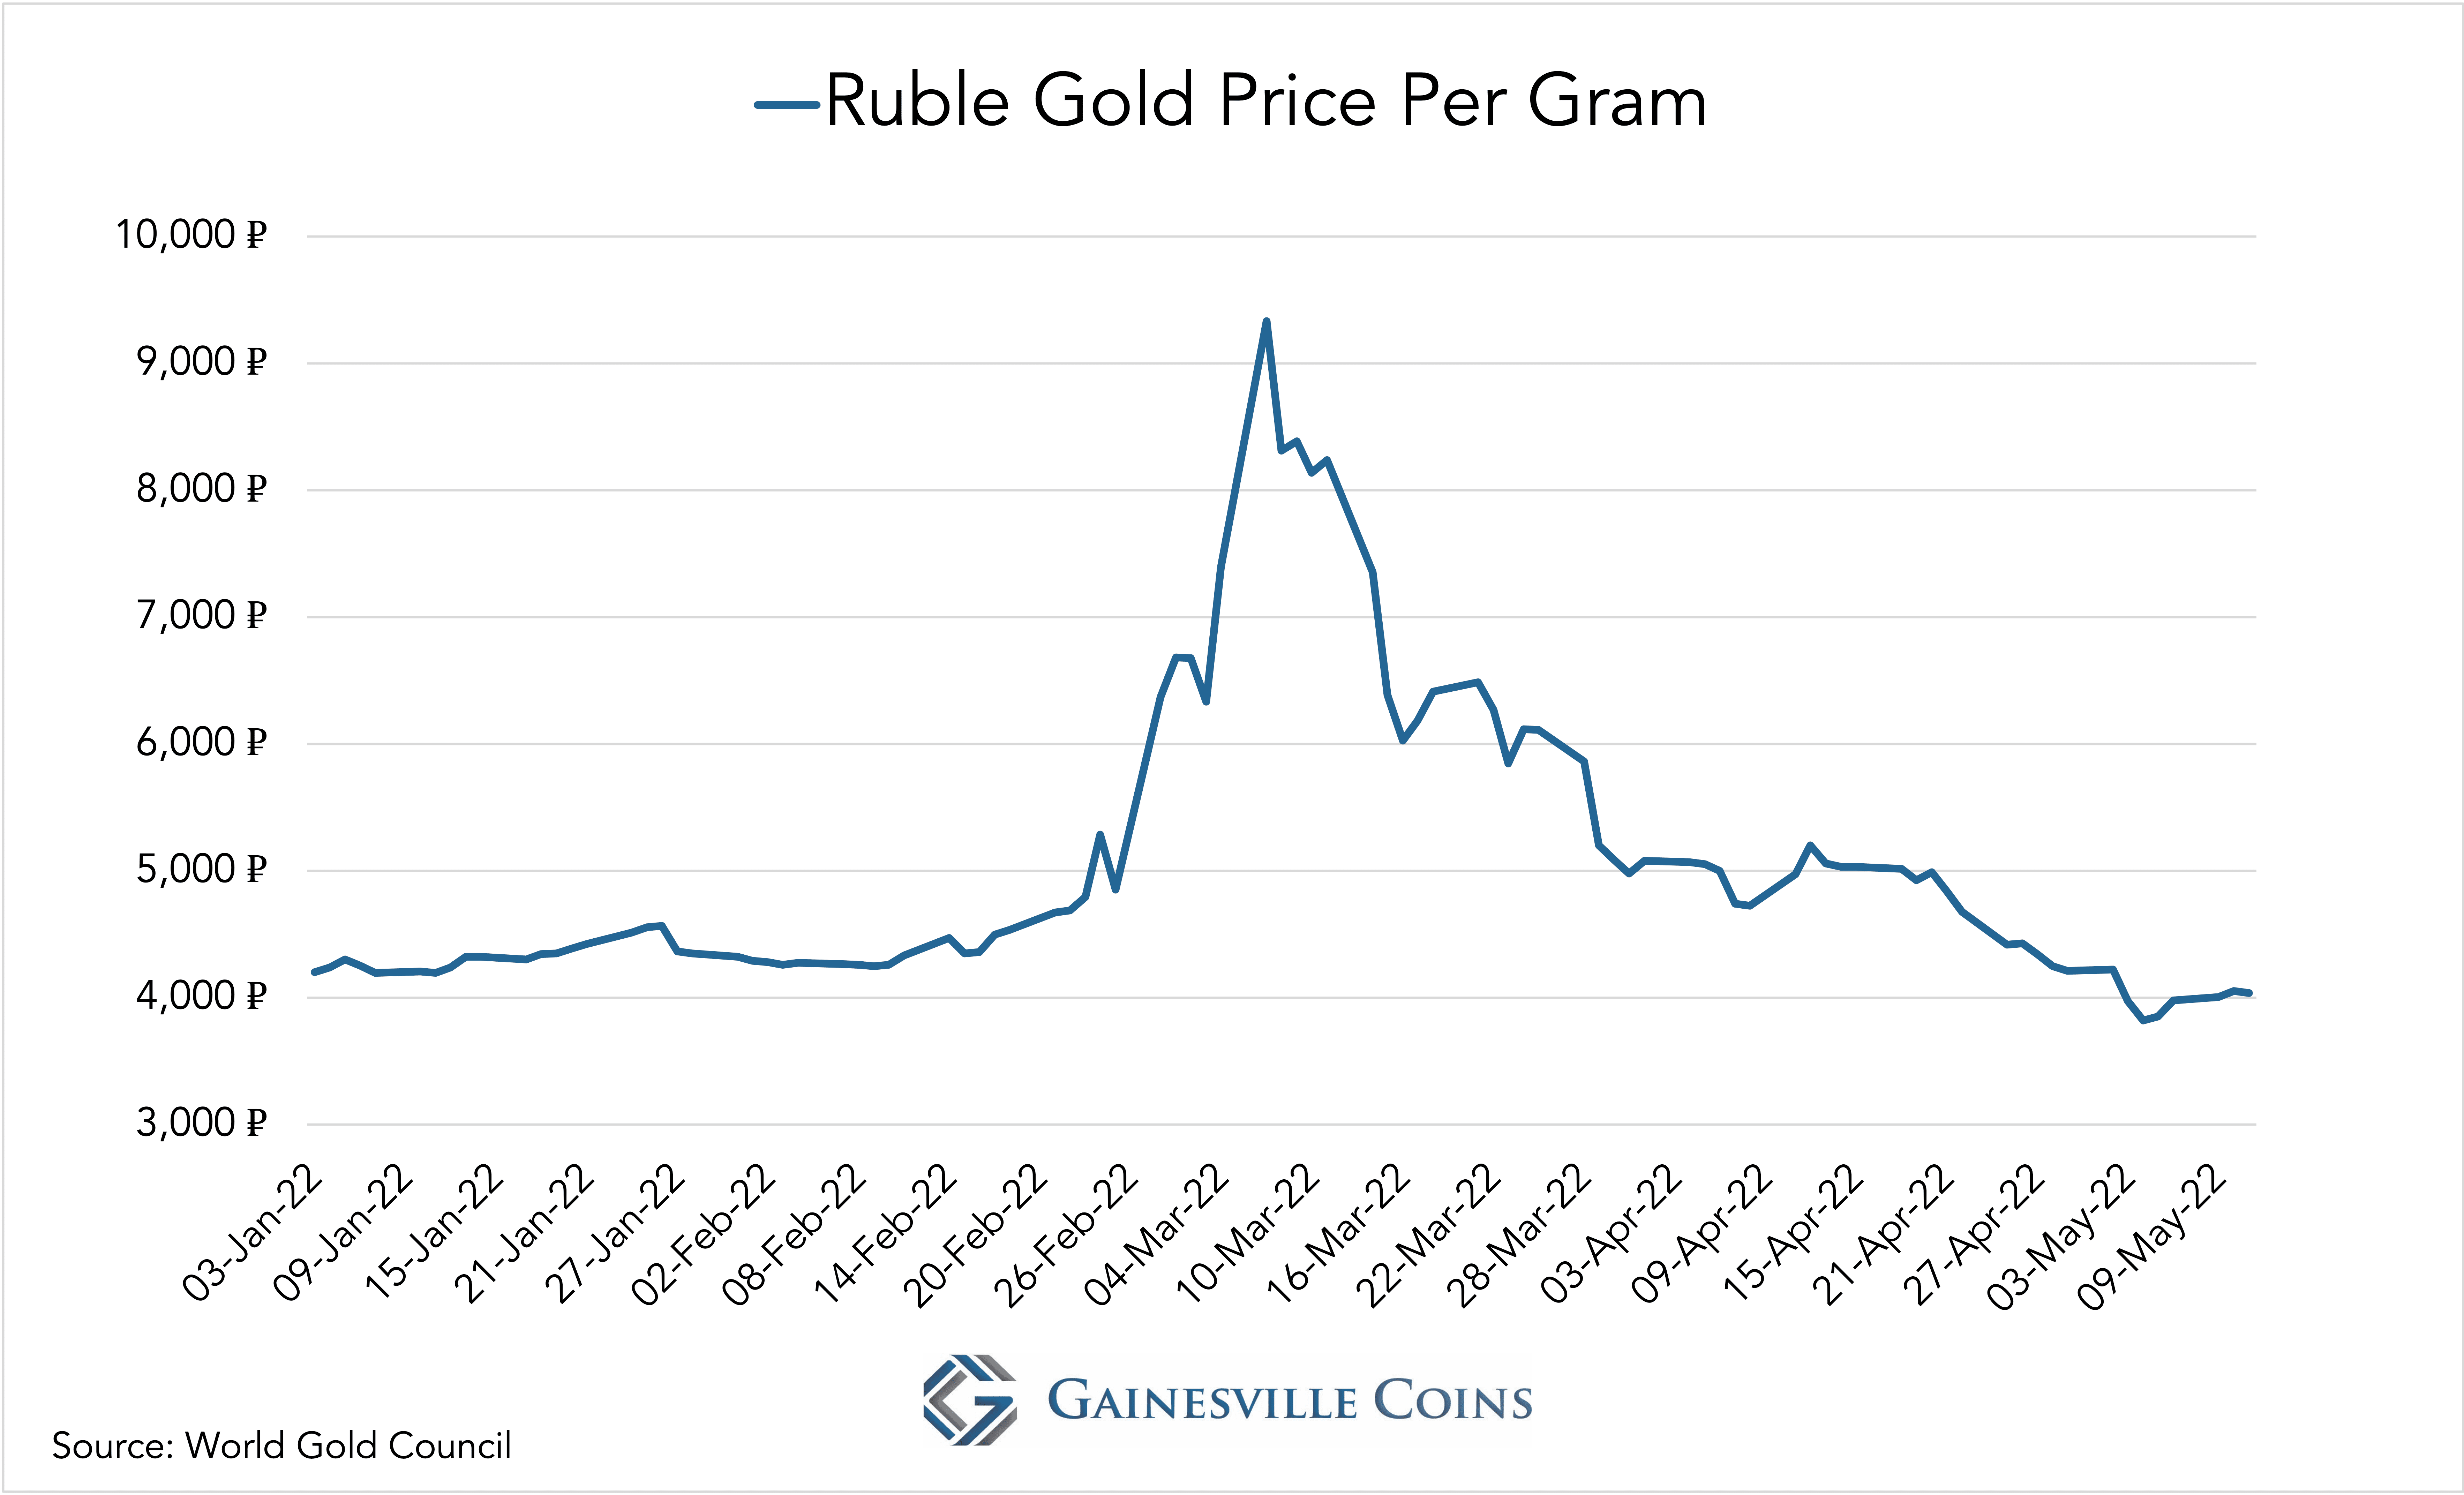 Ruble gold price per gram - Gainesvile Coins